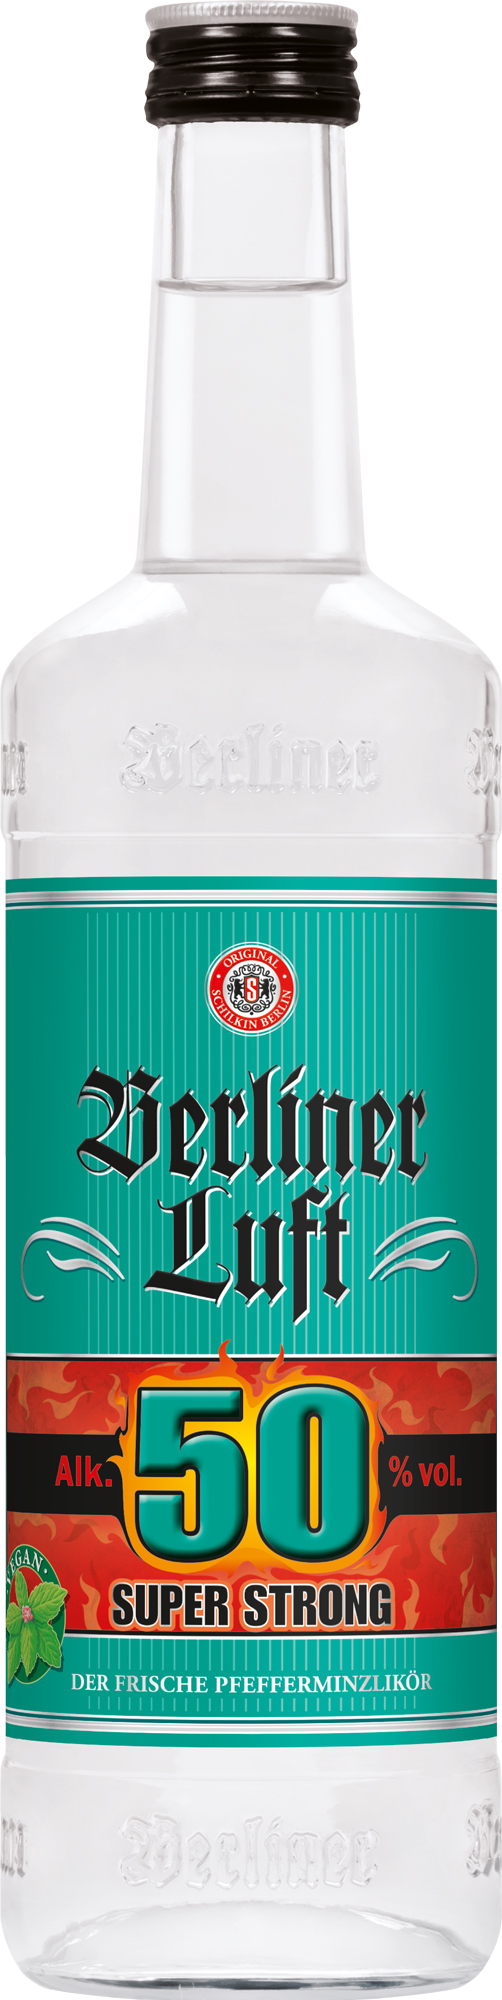 Berliner Luft - SUPER STRONG - Pfefferminzlikör 0,7l 50%vol.